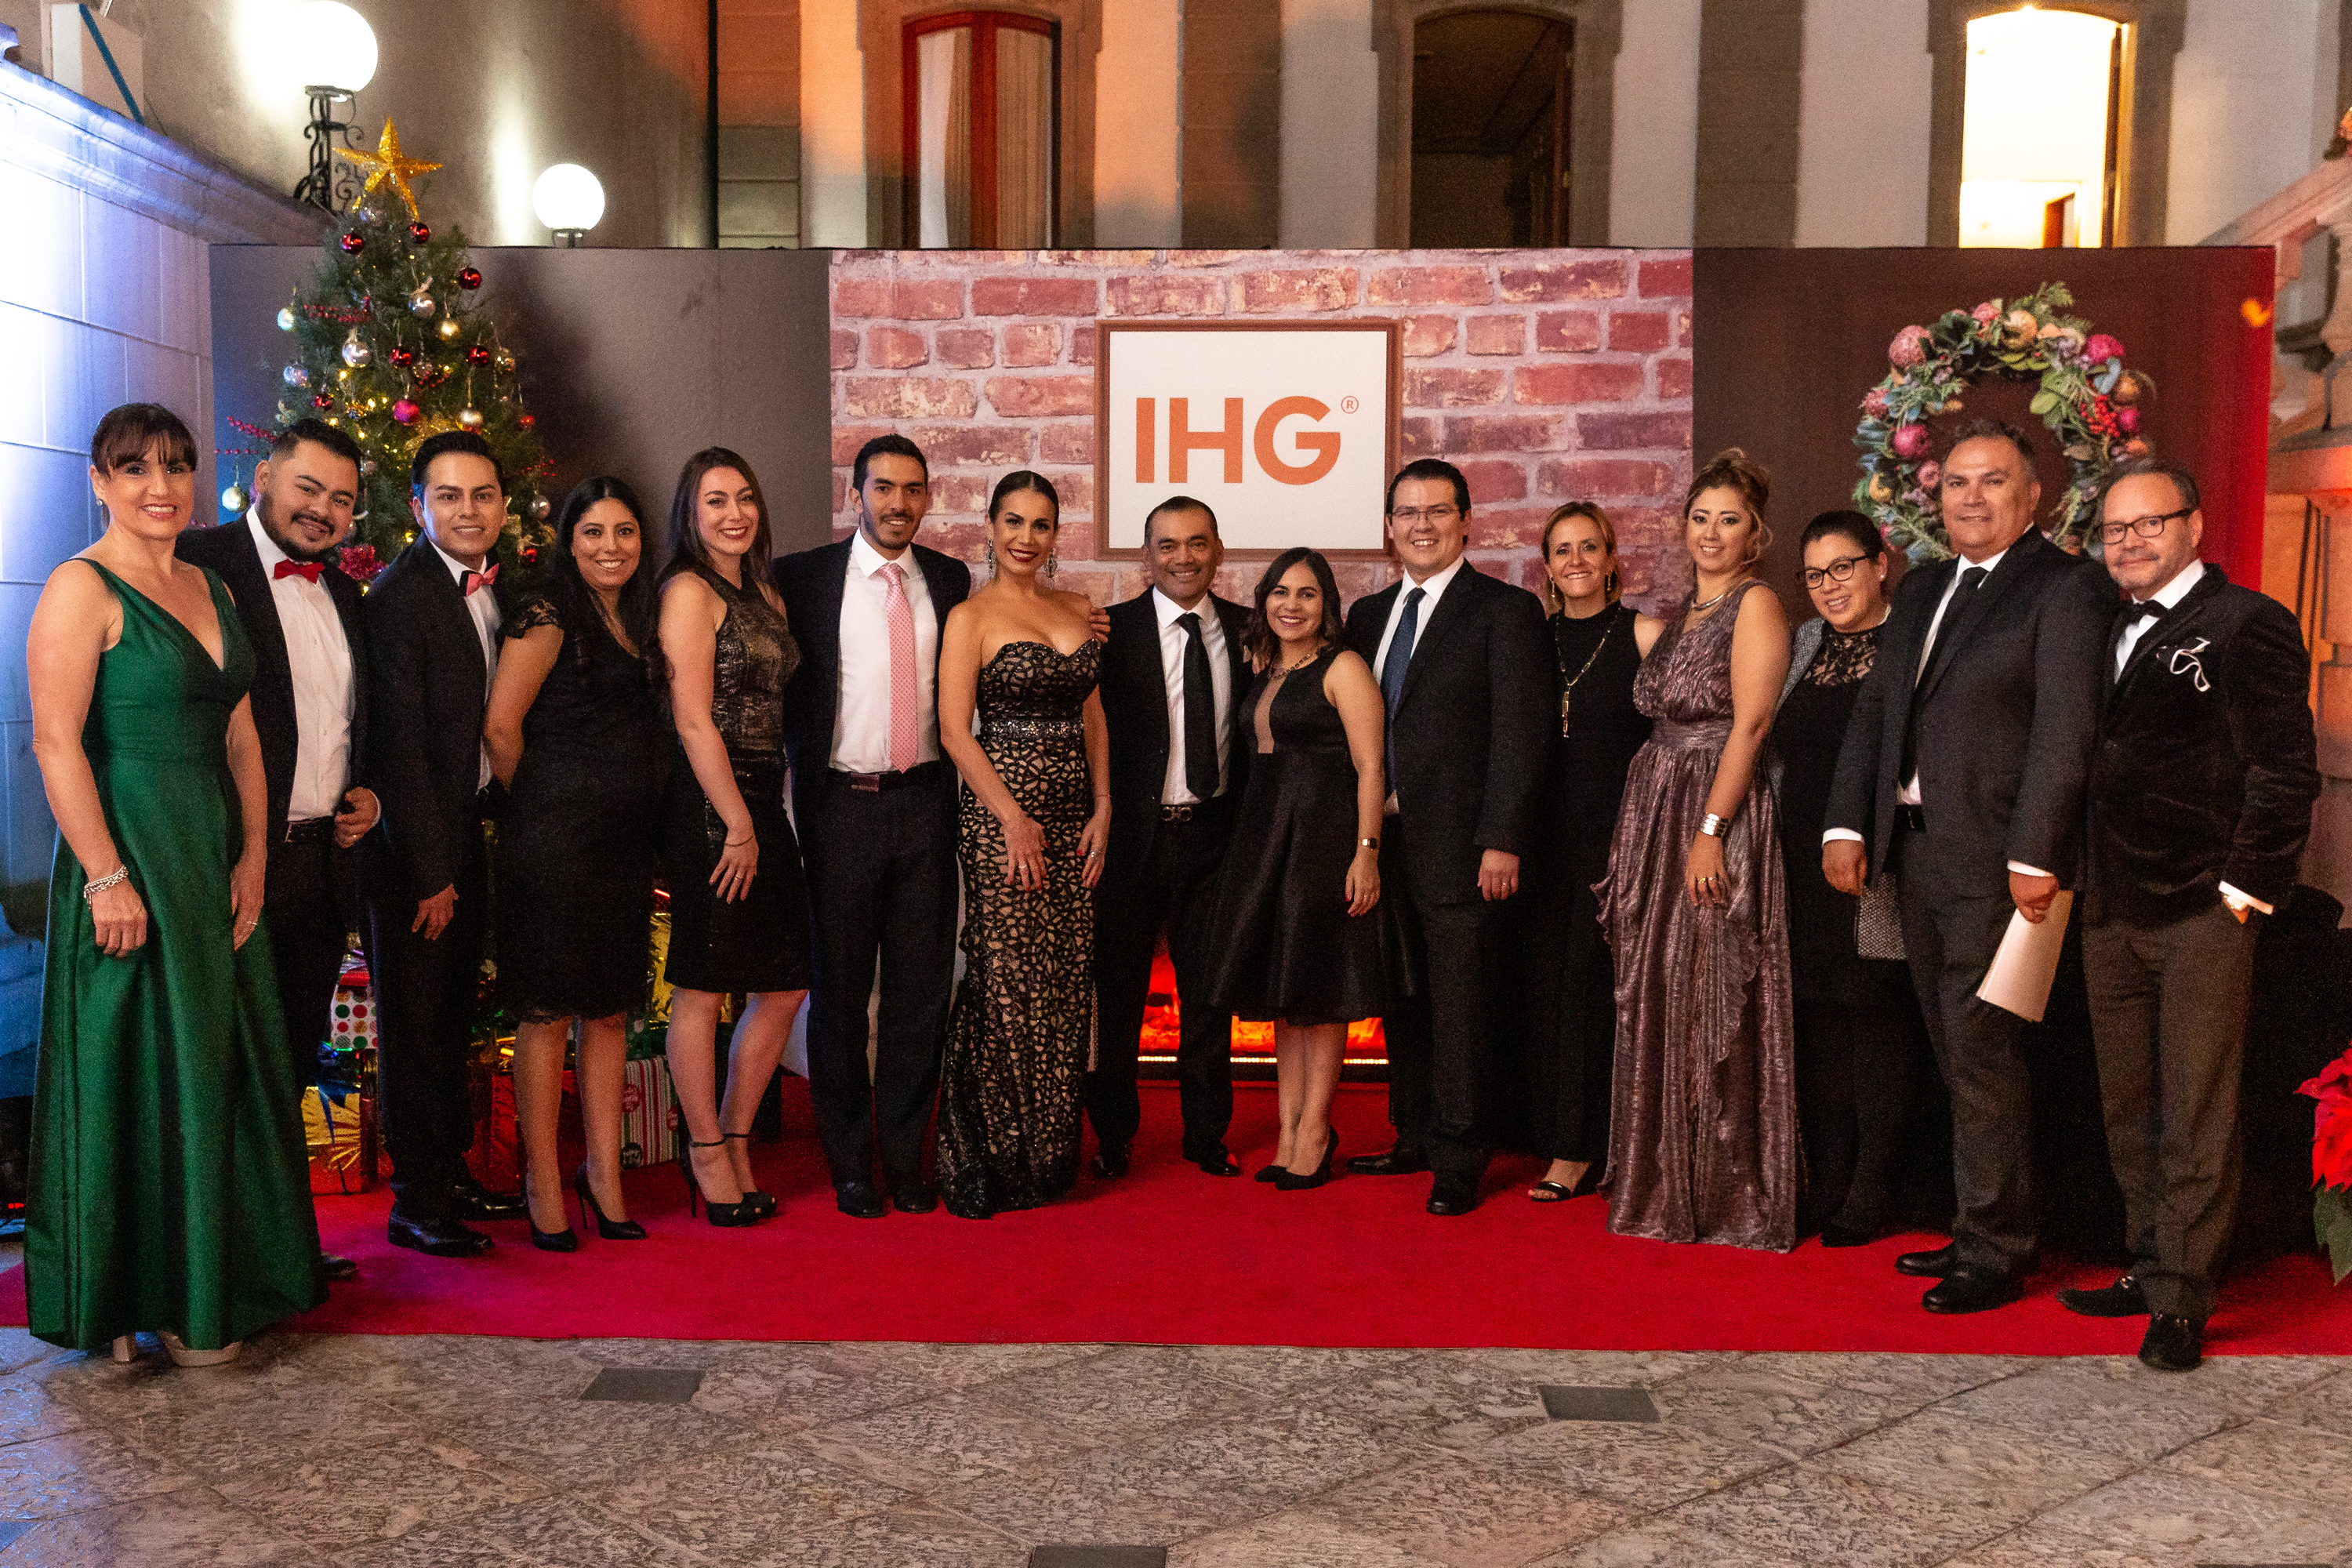 IHG continúa su expansión en Latinoamérica